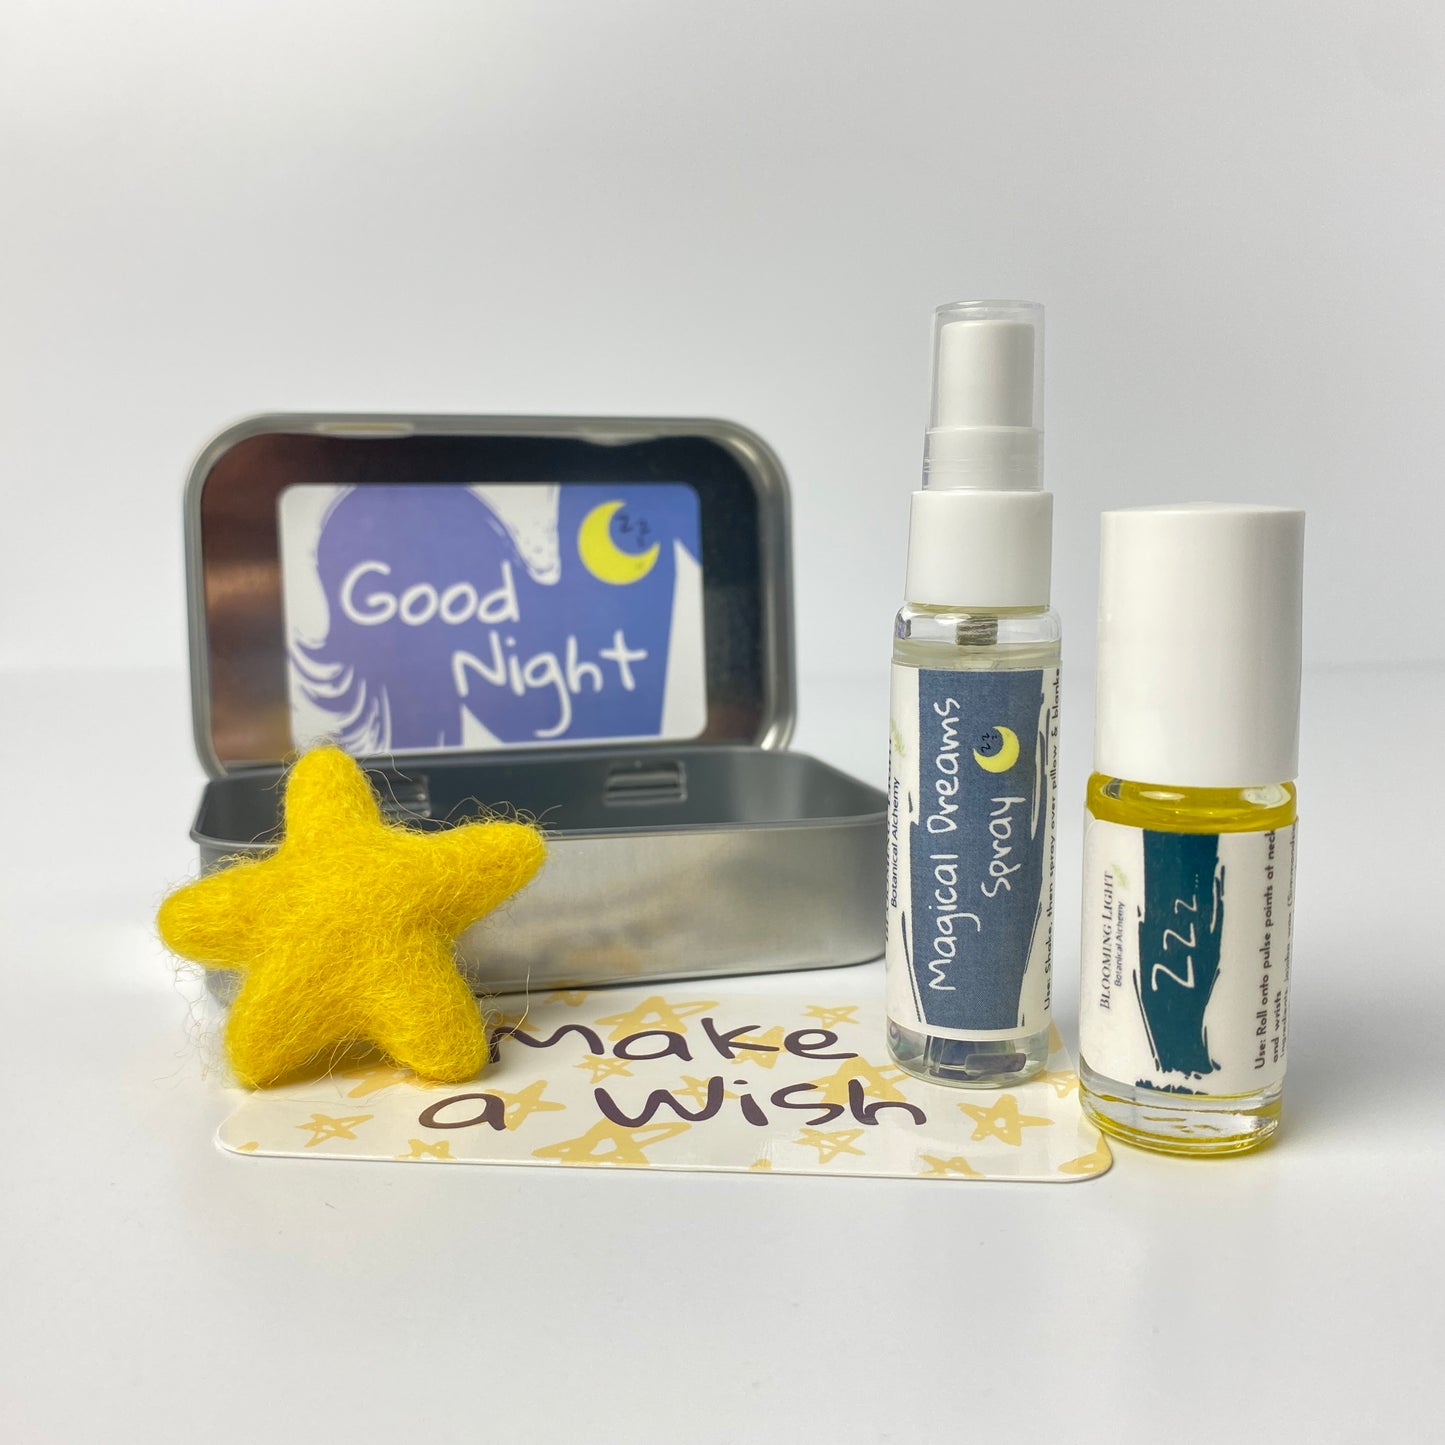 Magical Dreams Aromatherapy Kit